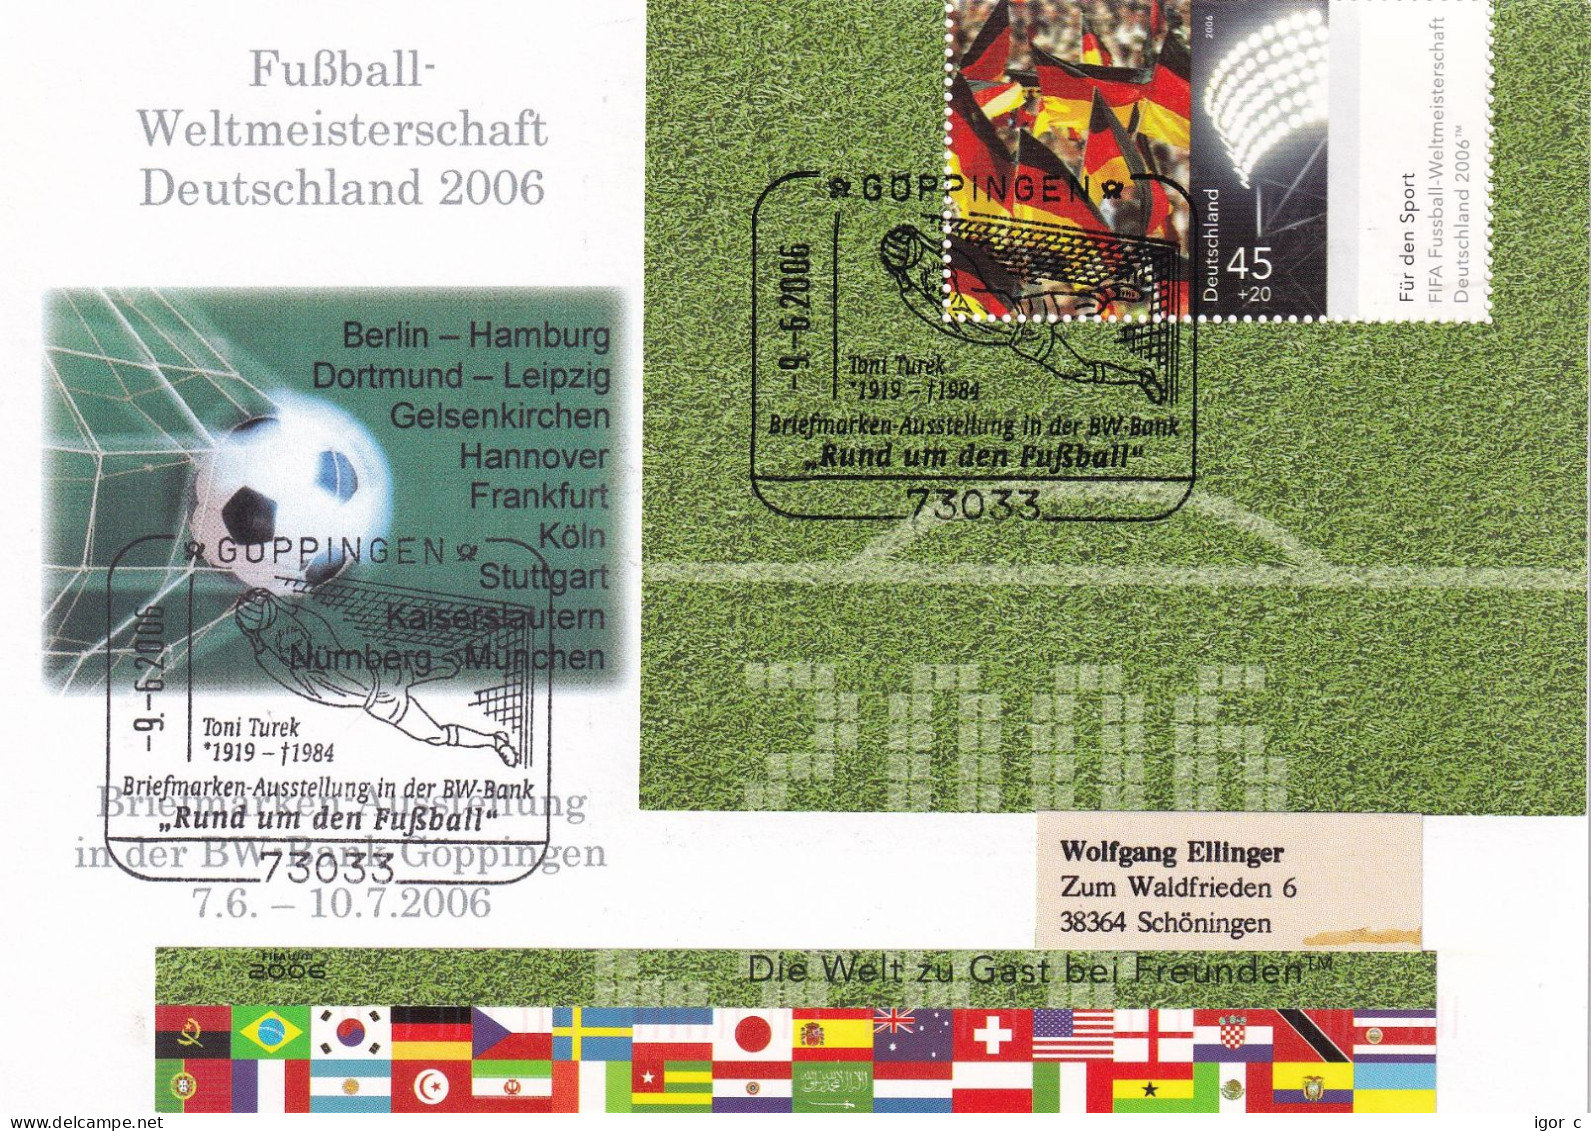 Germany 2006 Card; Football Fussball Soccer Calcio; FIFA World Cup 1954 2006; Toni Turek; Wunder Von Bern; Flags: Host - 1954 – Svizzera